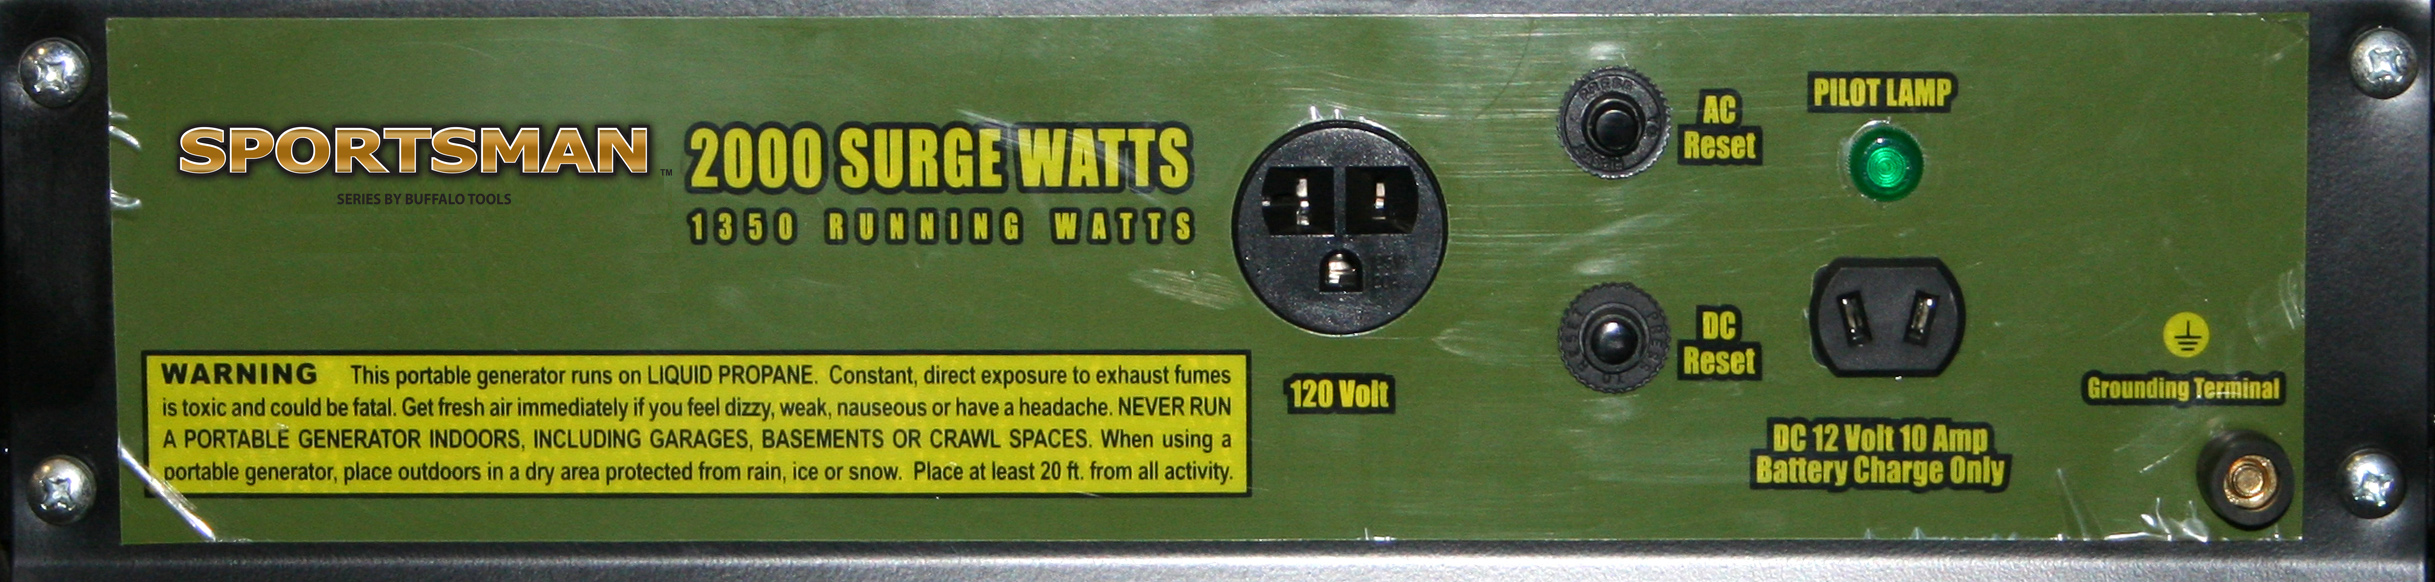 Sportsman Series 2000 Surge/1350 Running Watts Propane Generator - image 4 of 5